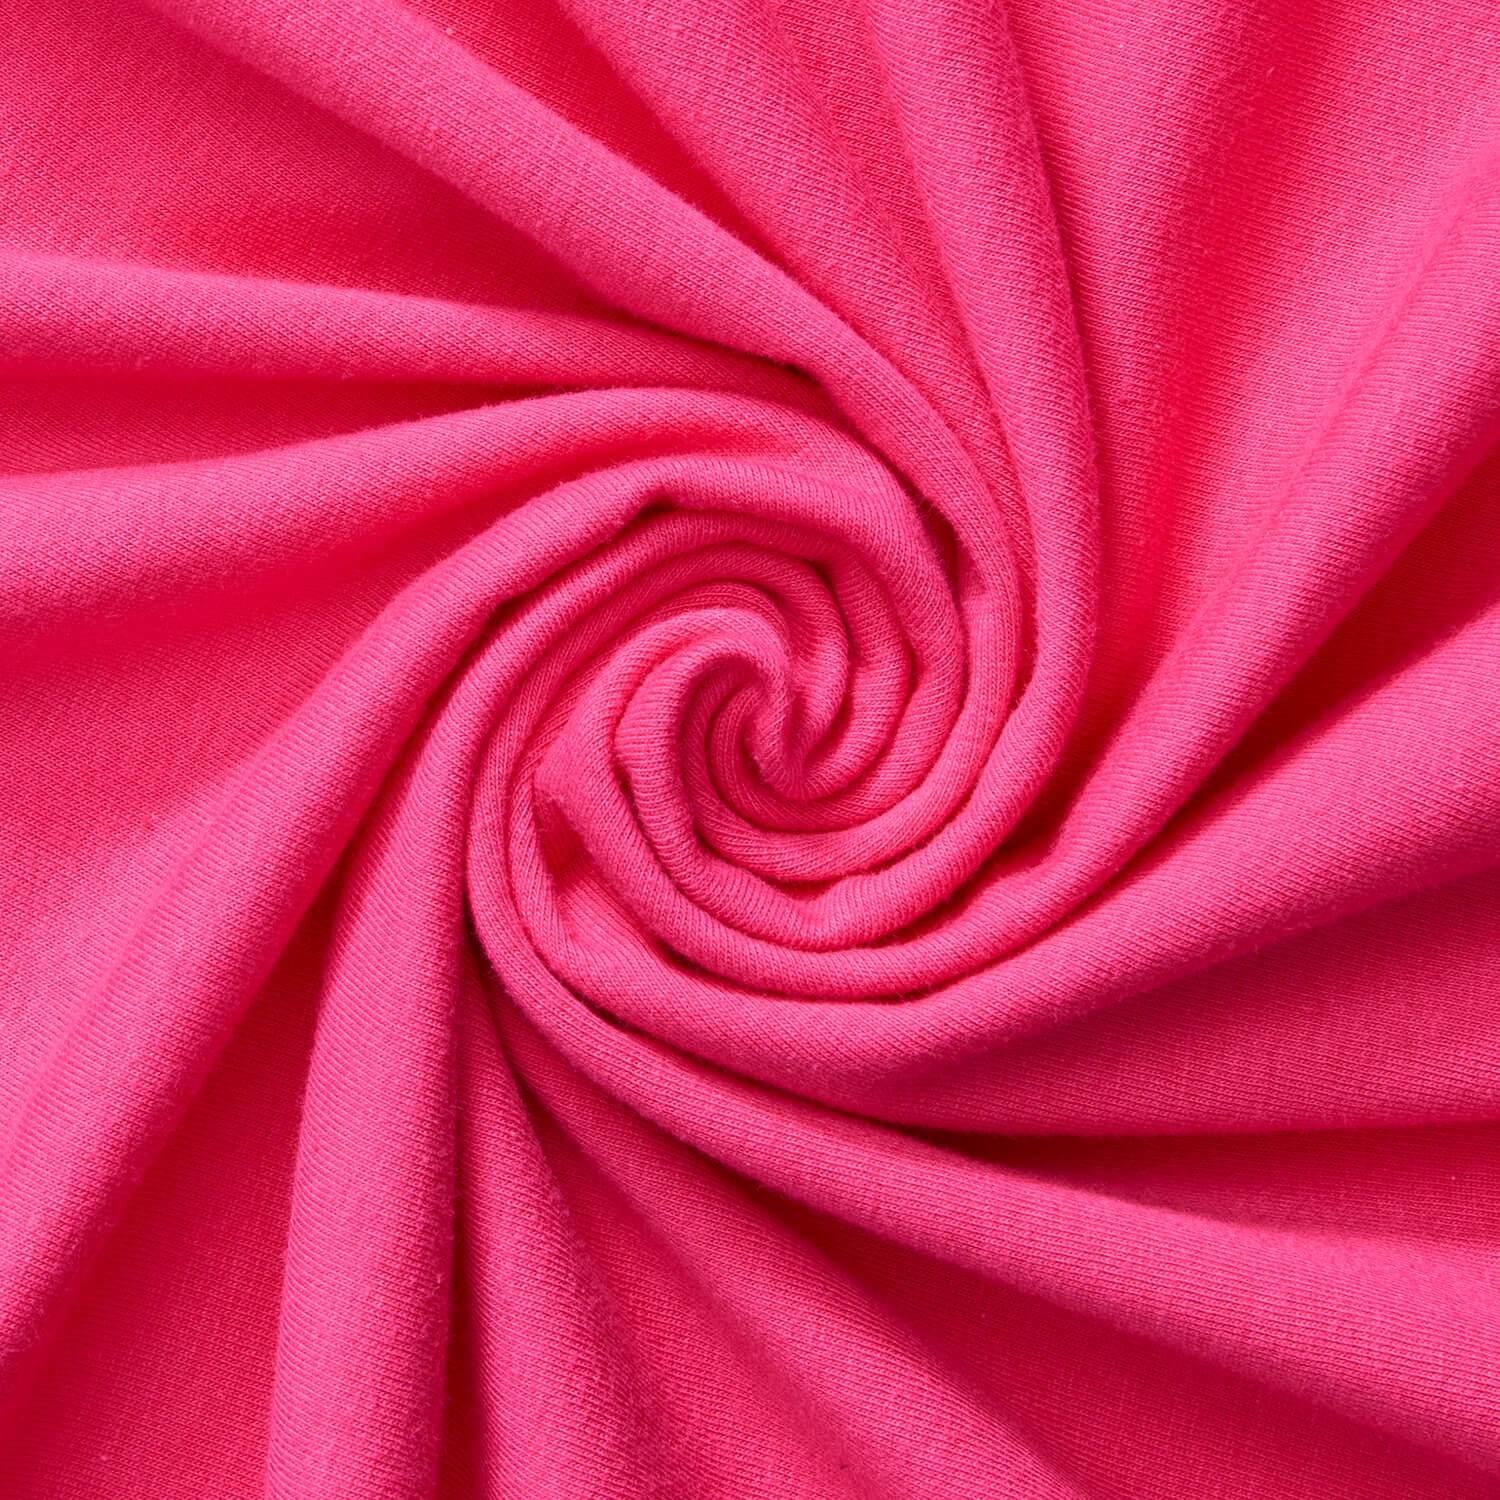 Cotton Jersey Lycra Spandex knit Stretch Fabric 58/60 wide (Fuchsia) 